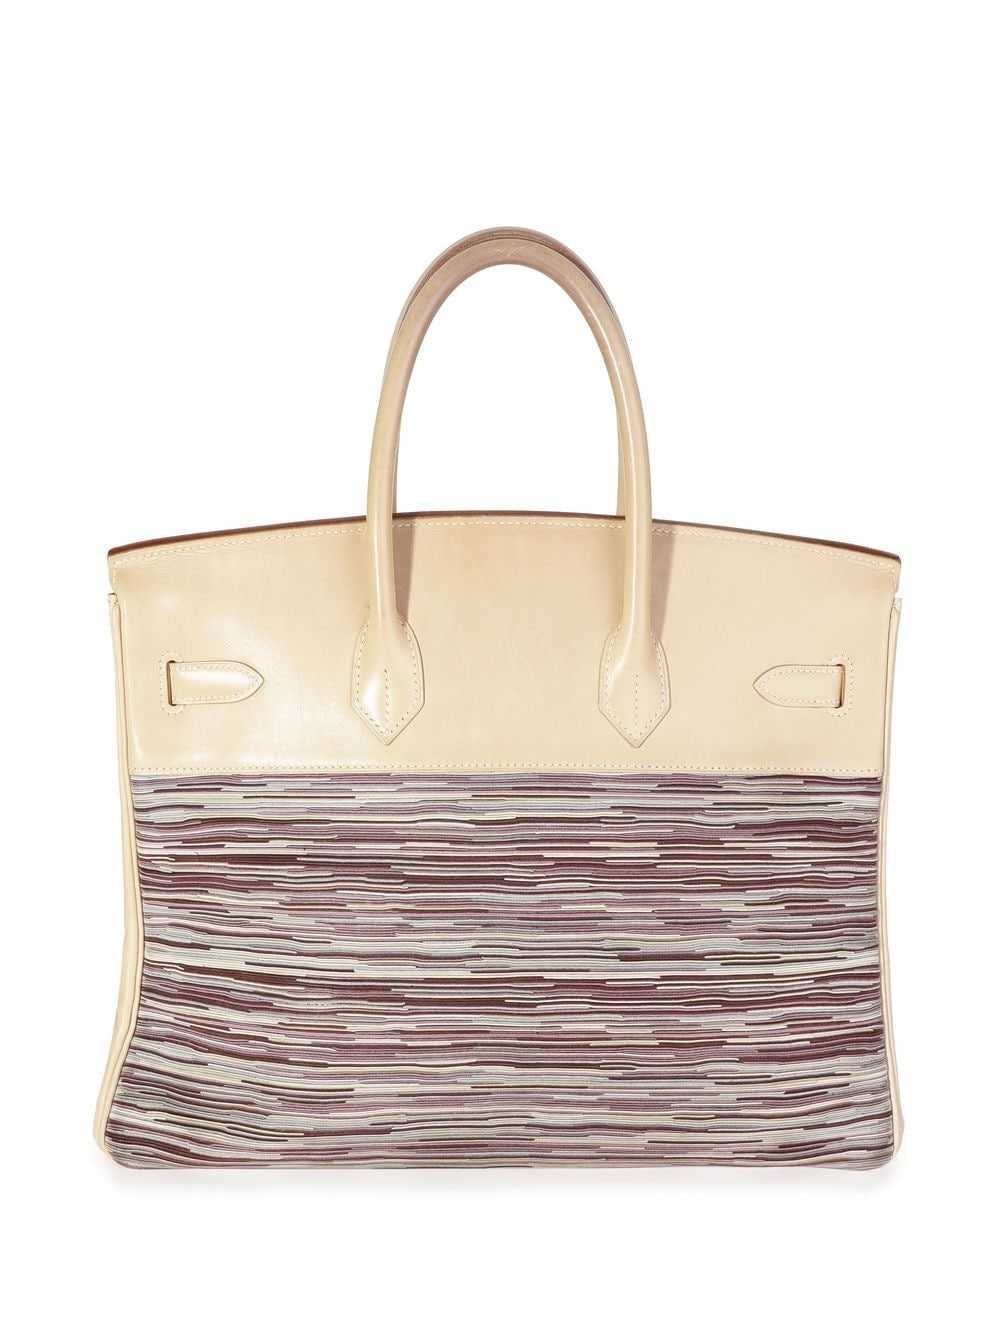 Hermès Pre-Owned Birkin 35 handbag - Neutrals - image 2